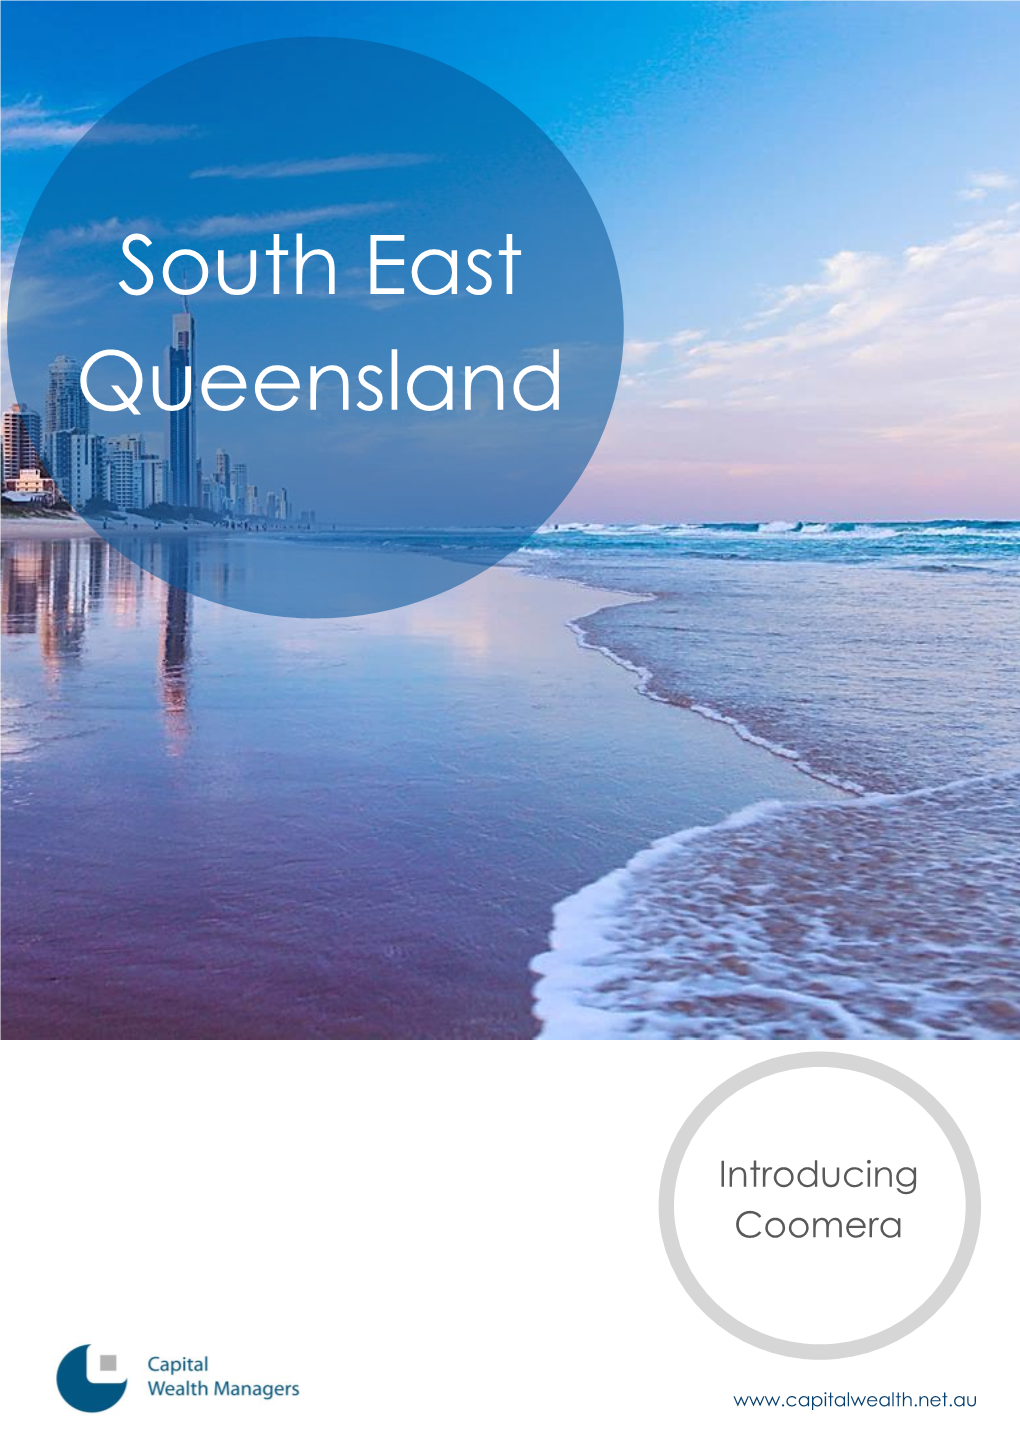 South East Queensland